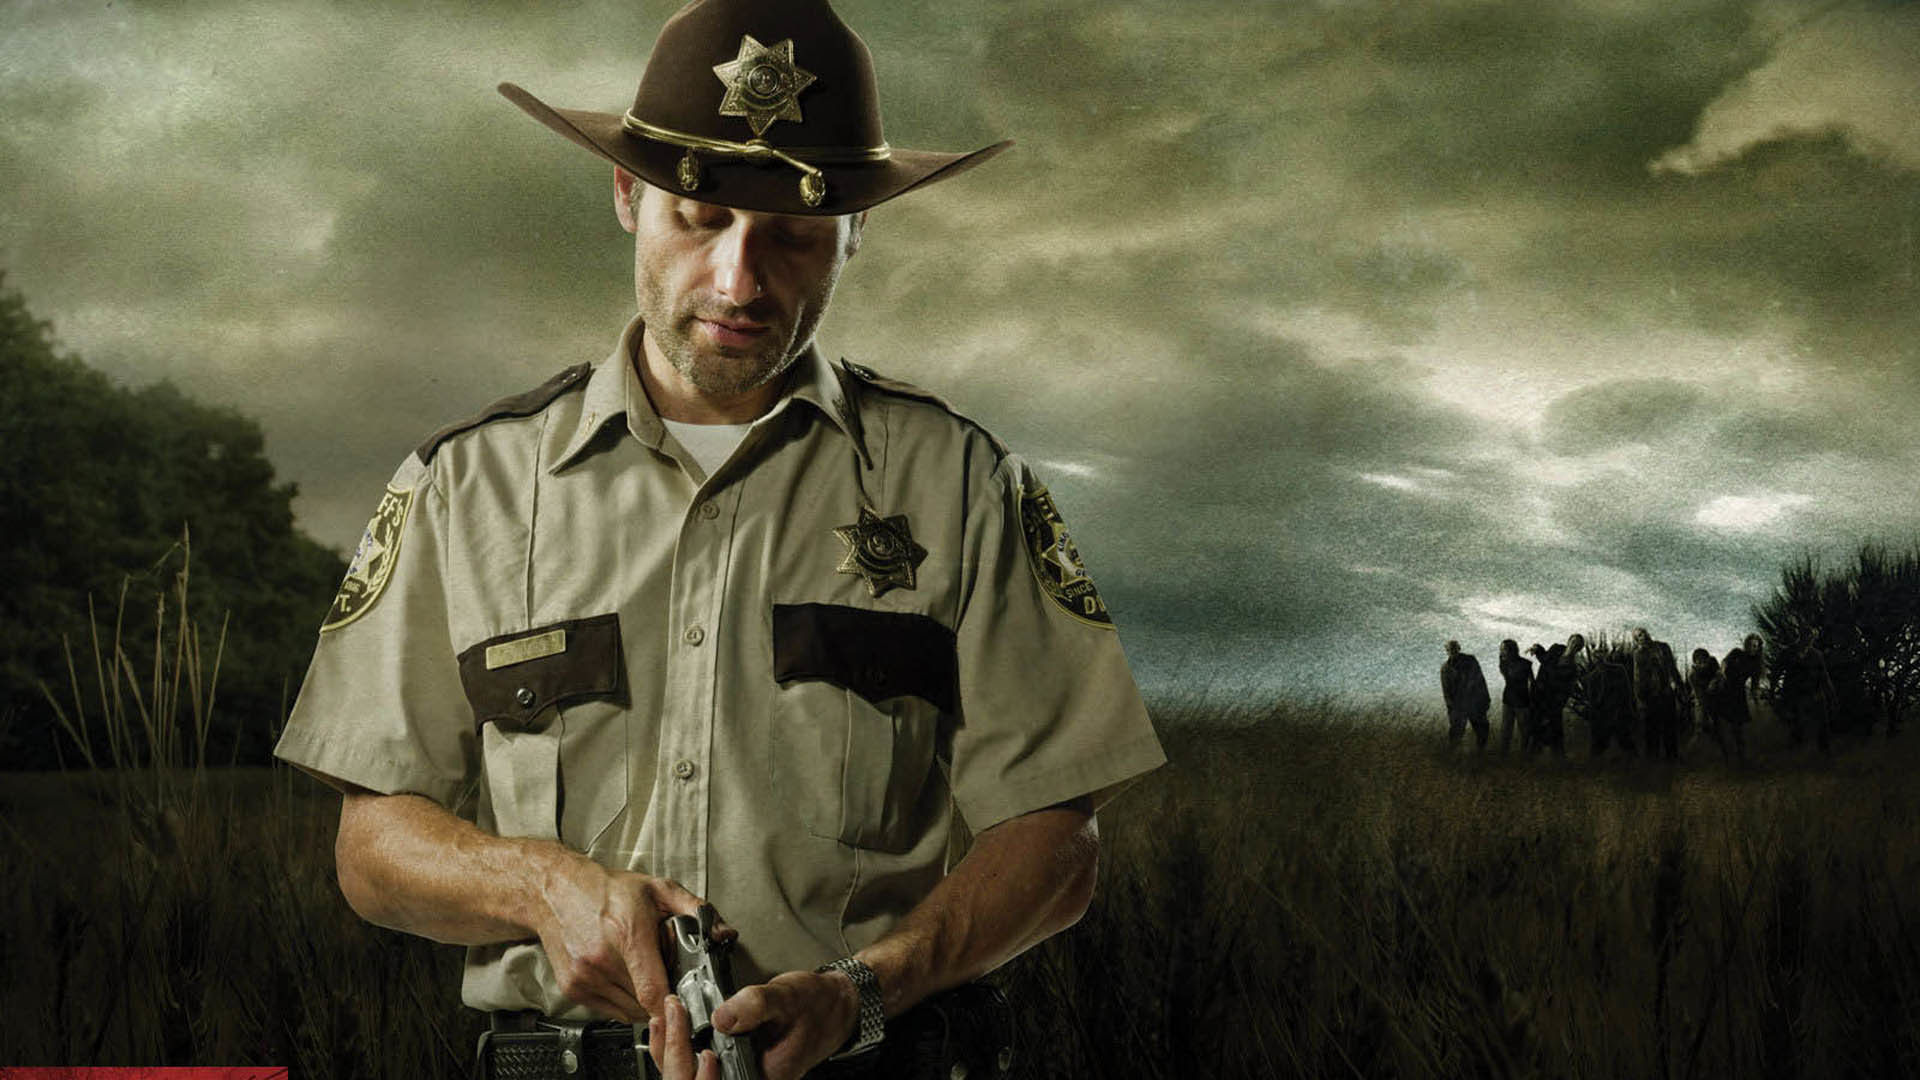 1920x1080 ... The Walking Dead - Rick Grimes Wallpaper by Ra-Shell on DeviantArt ...